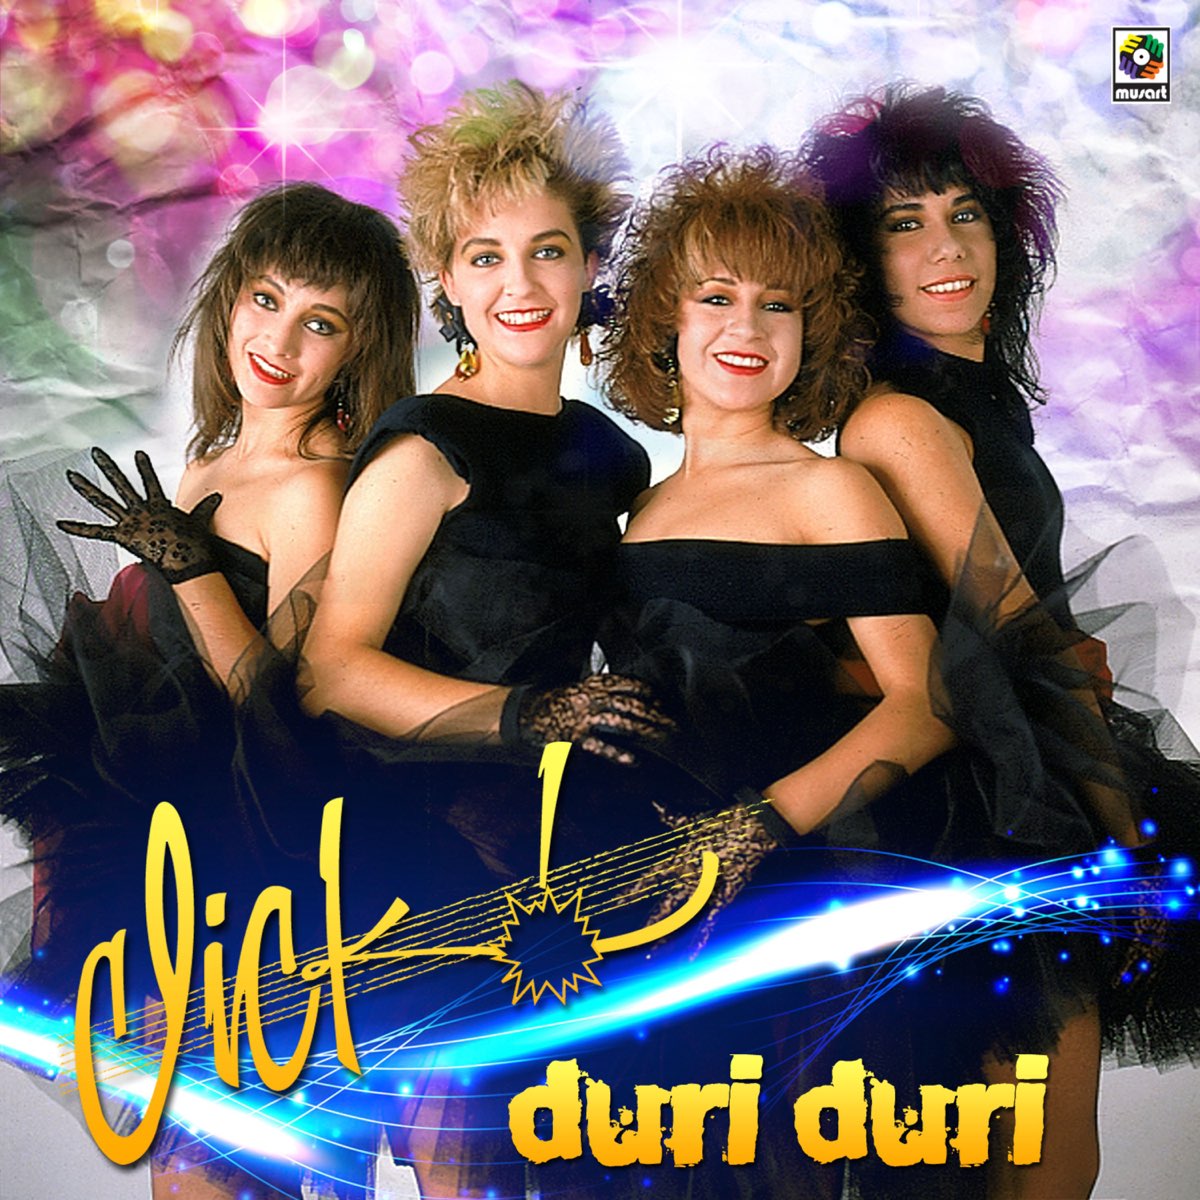 Duri Duri - Single - Album by Click - Apple Music